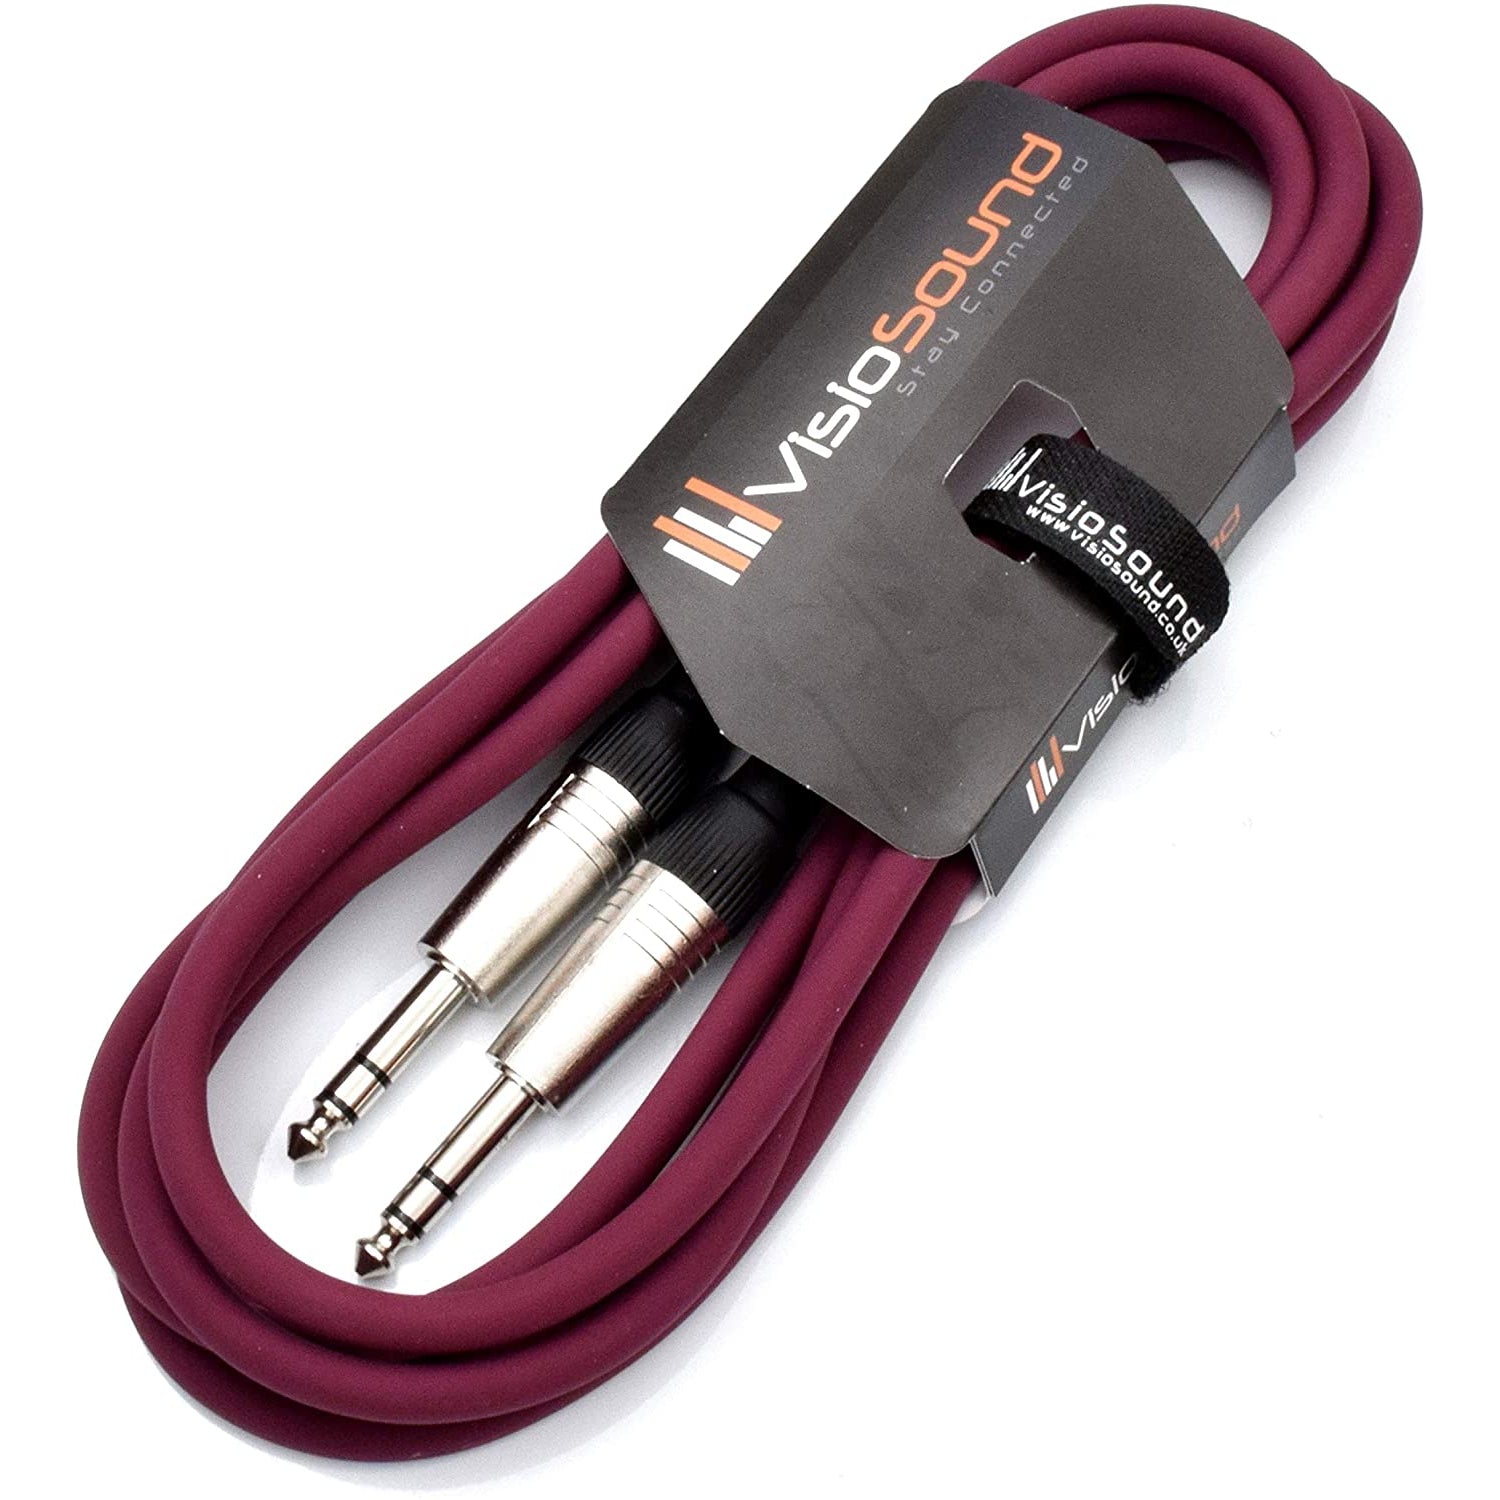 VisioSound High Performance Audio Cables - Burgundy